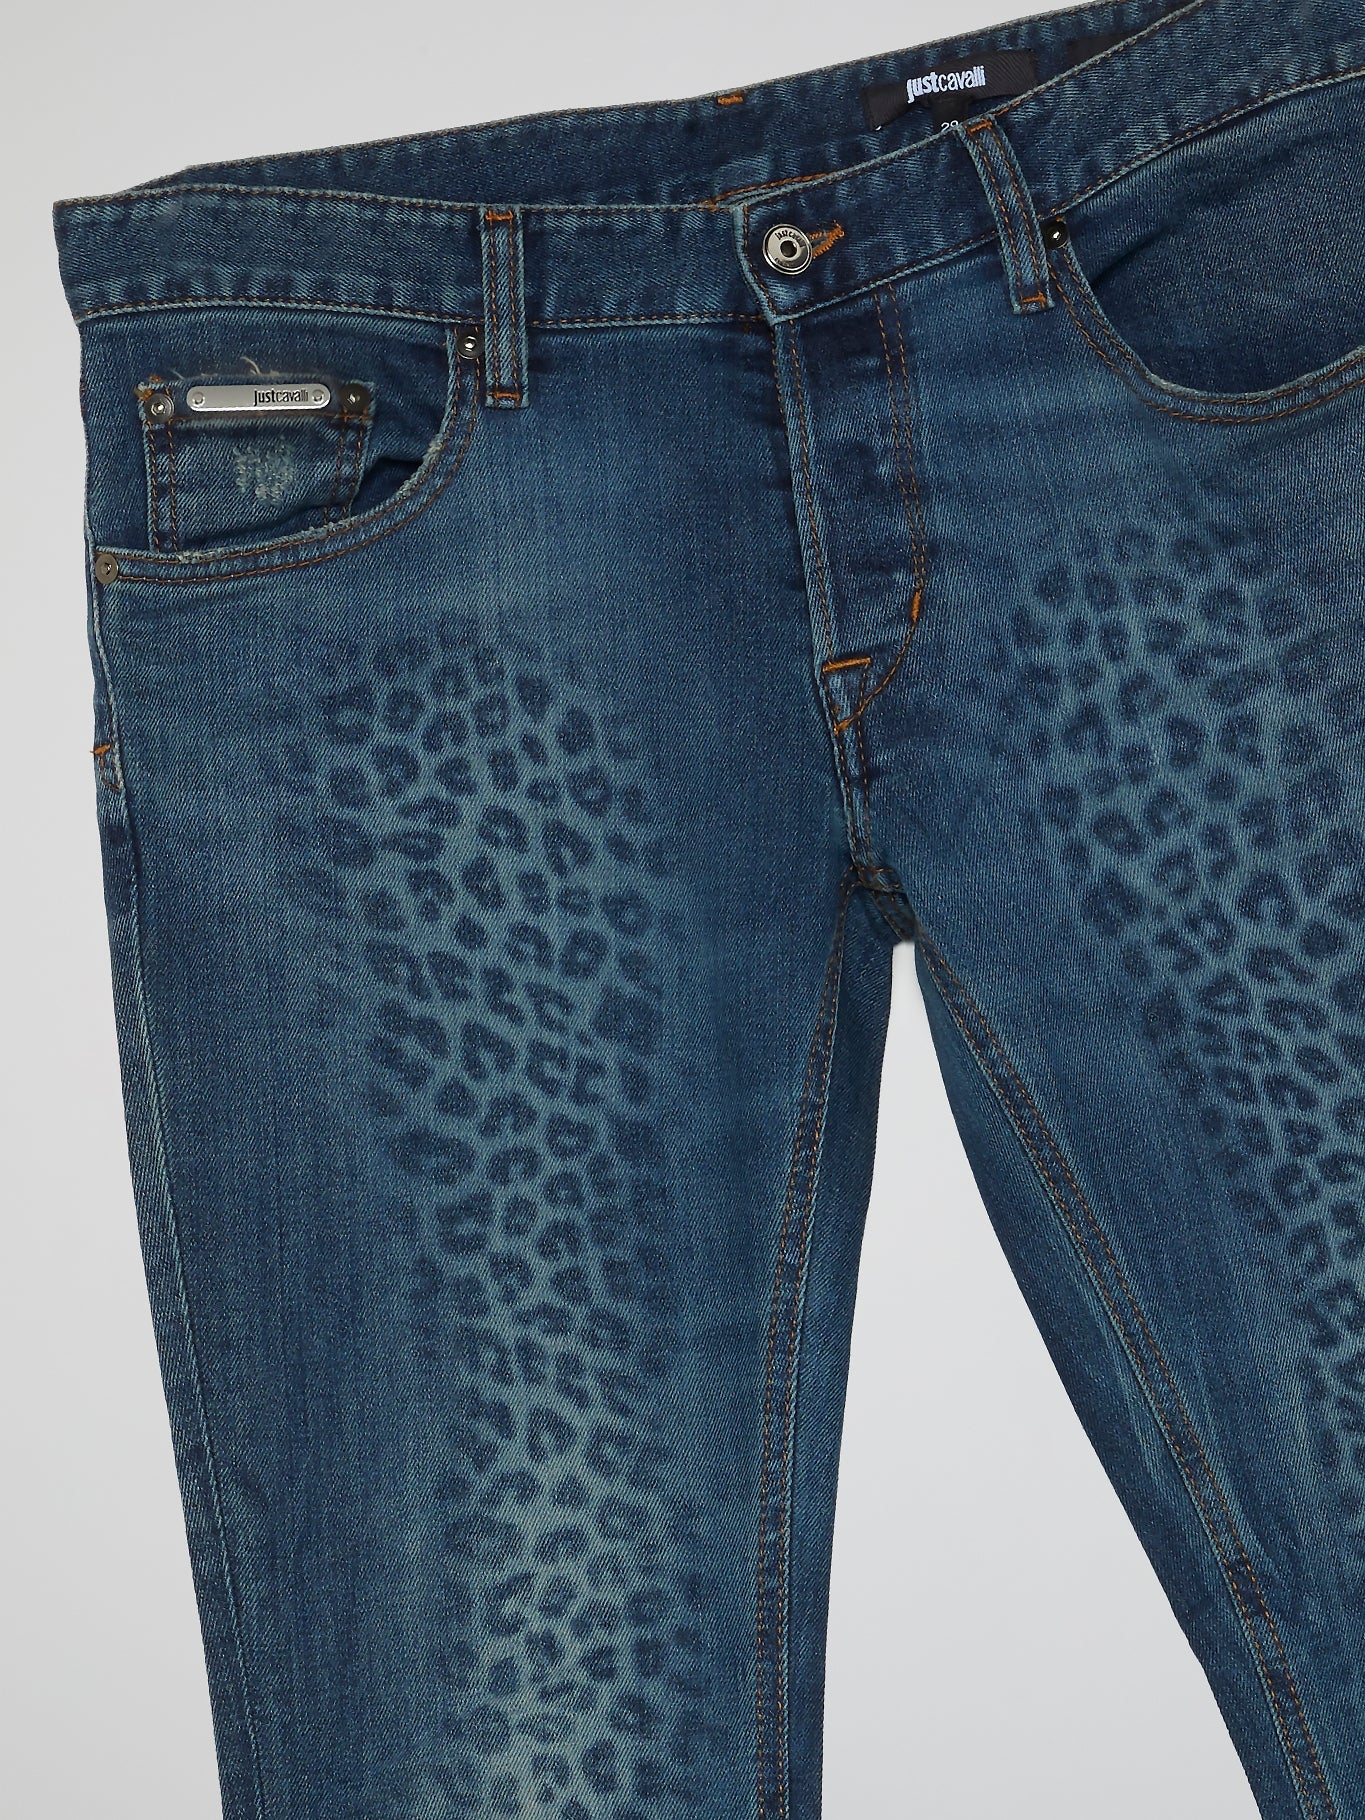 Navy Leopard Print Denim Jeans